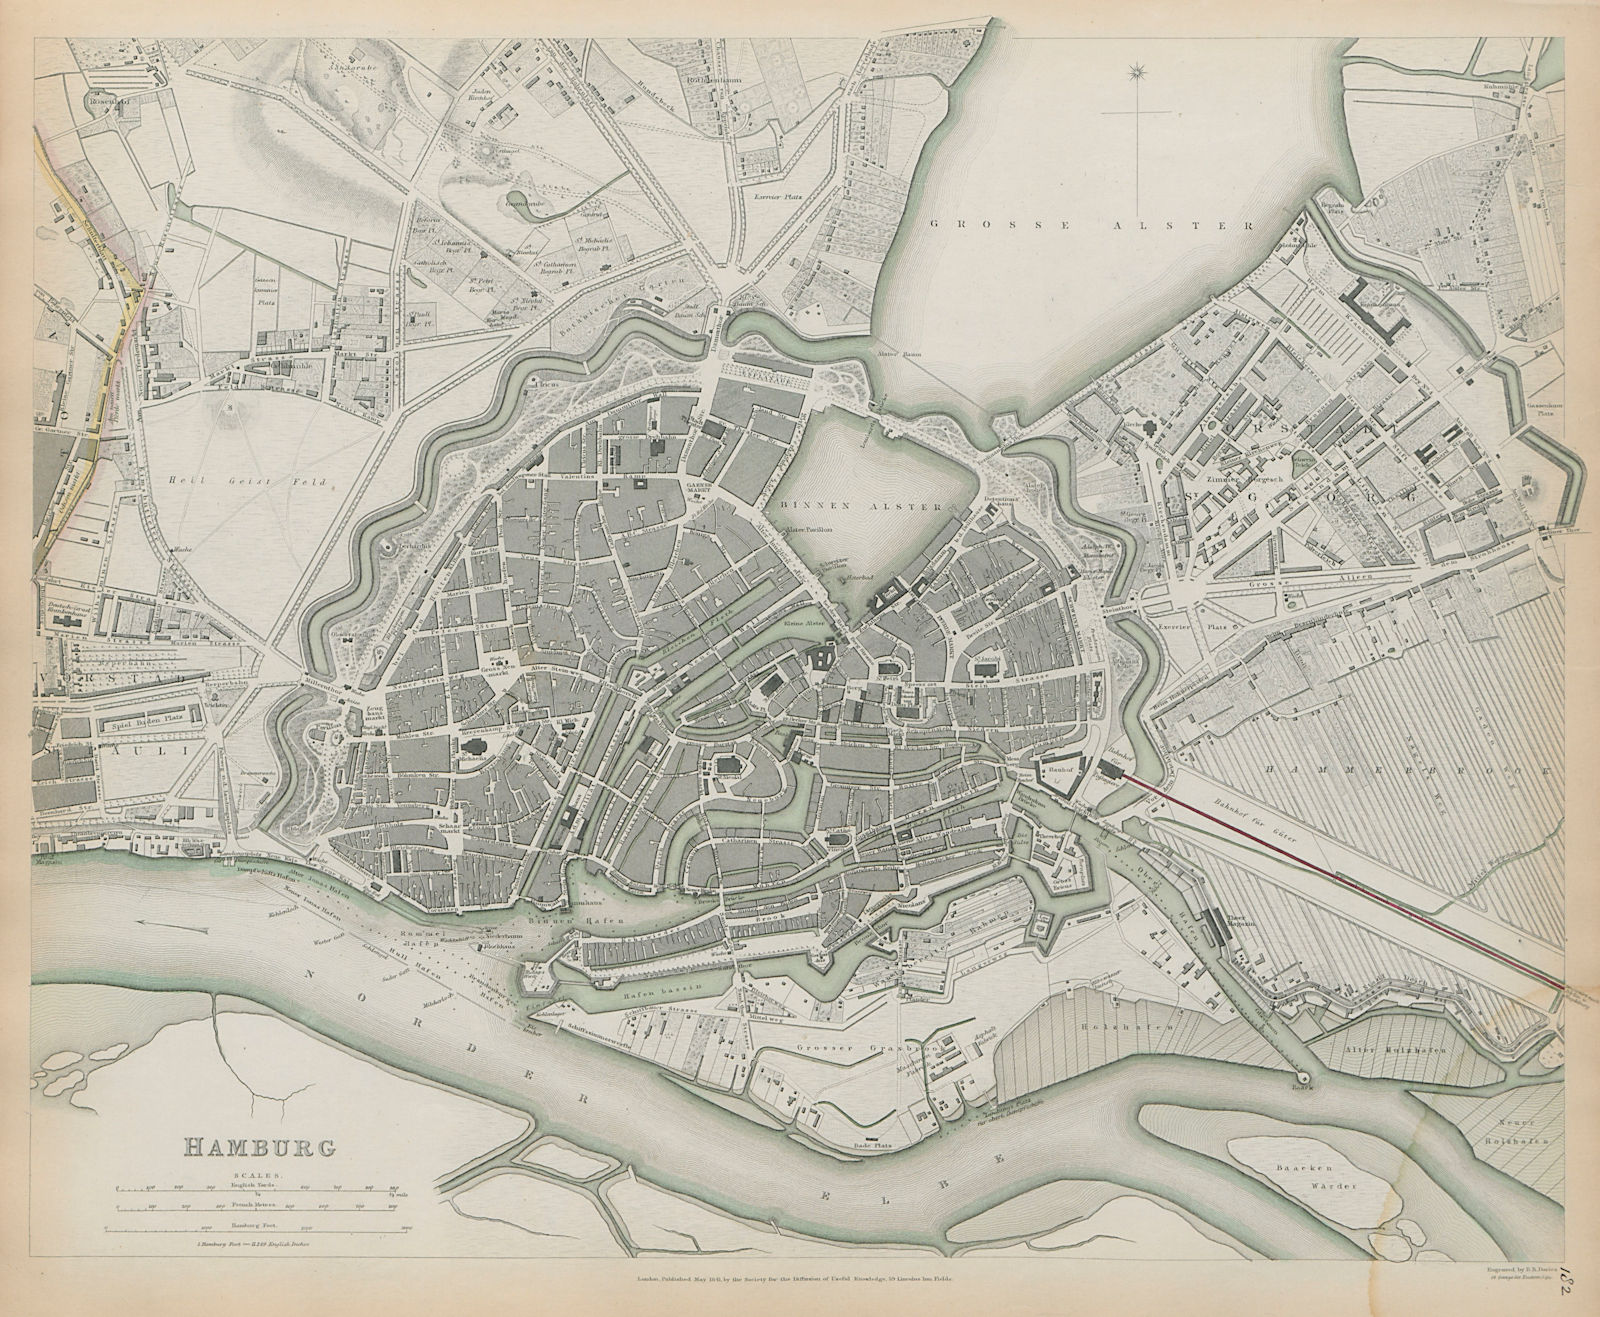 Associate Product HAMBURG Antique city town map plan SDUK 1844 old chart